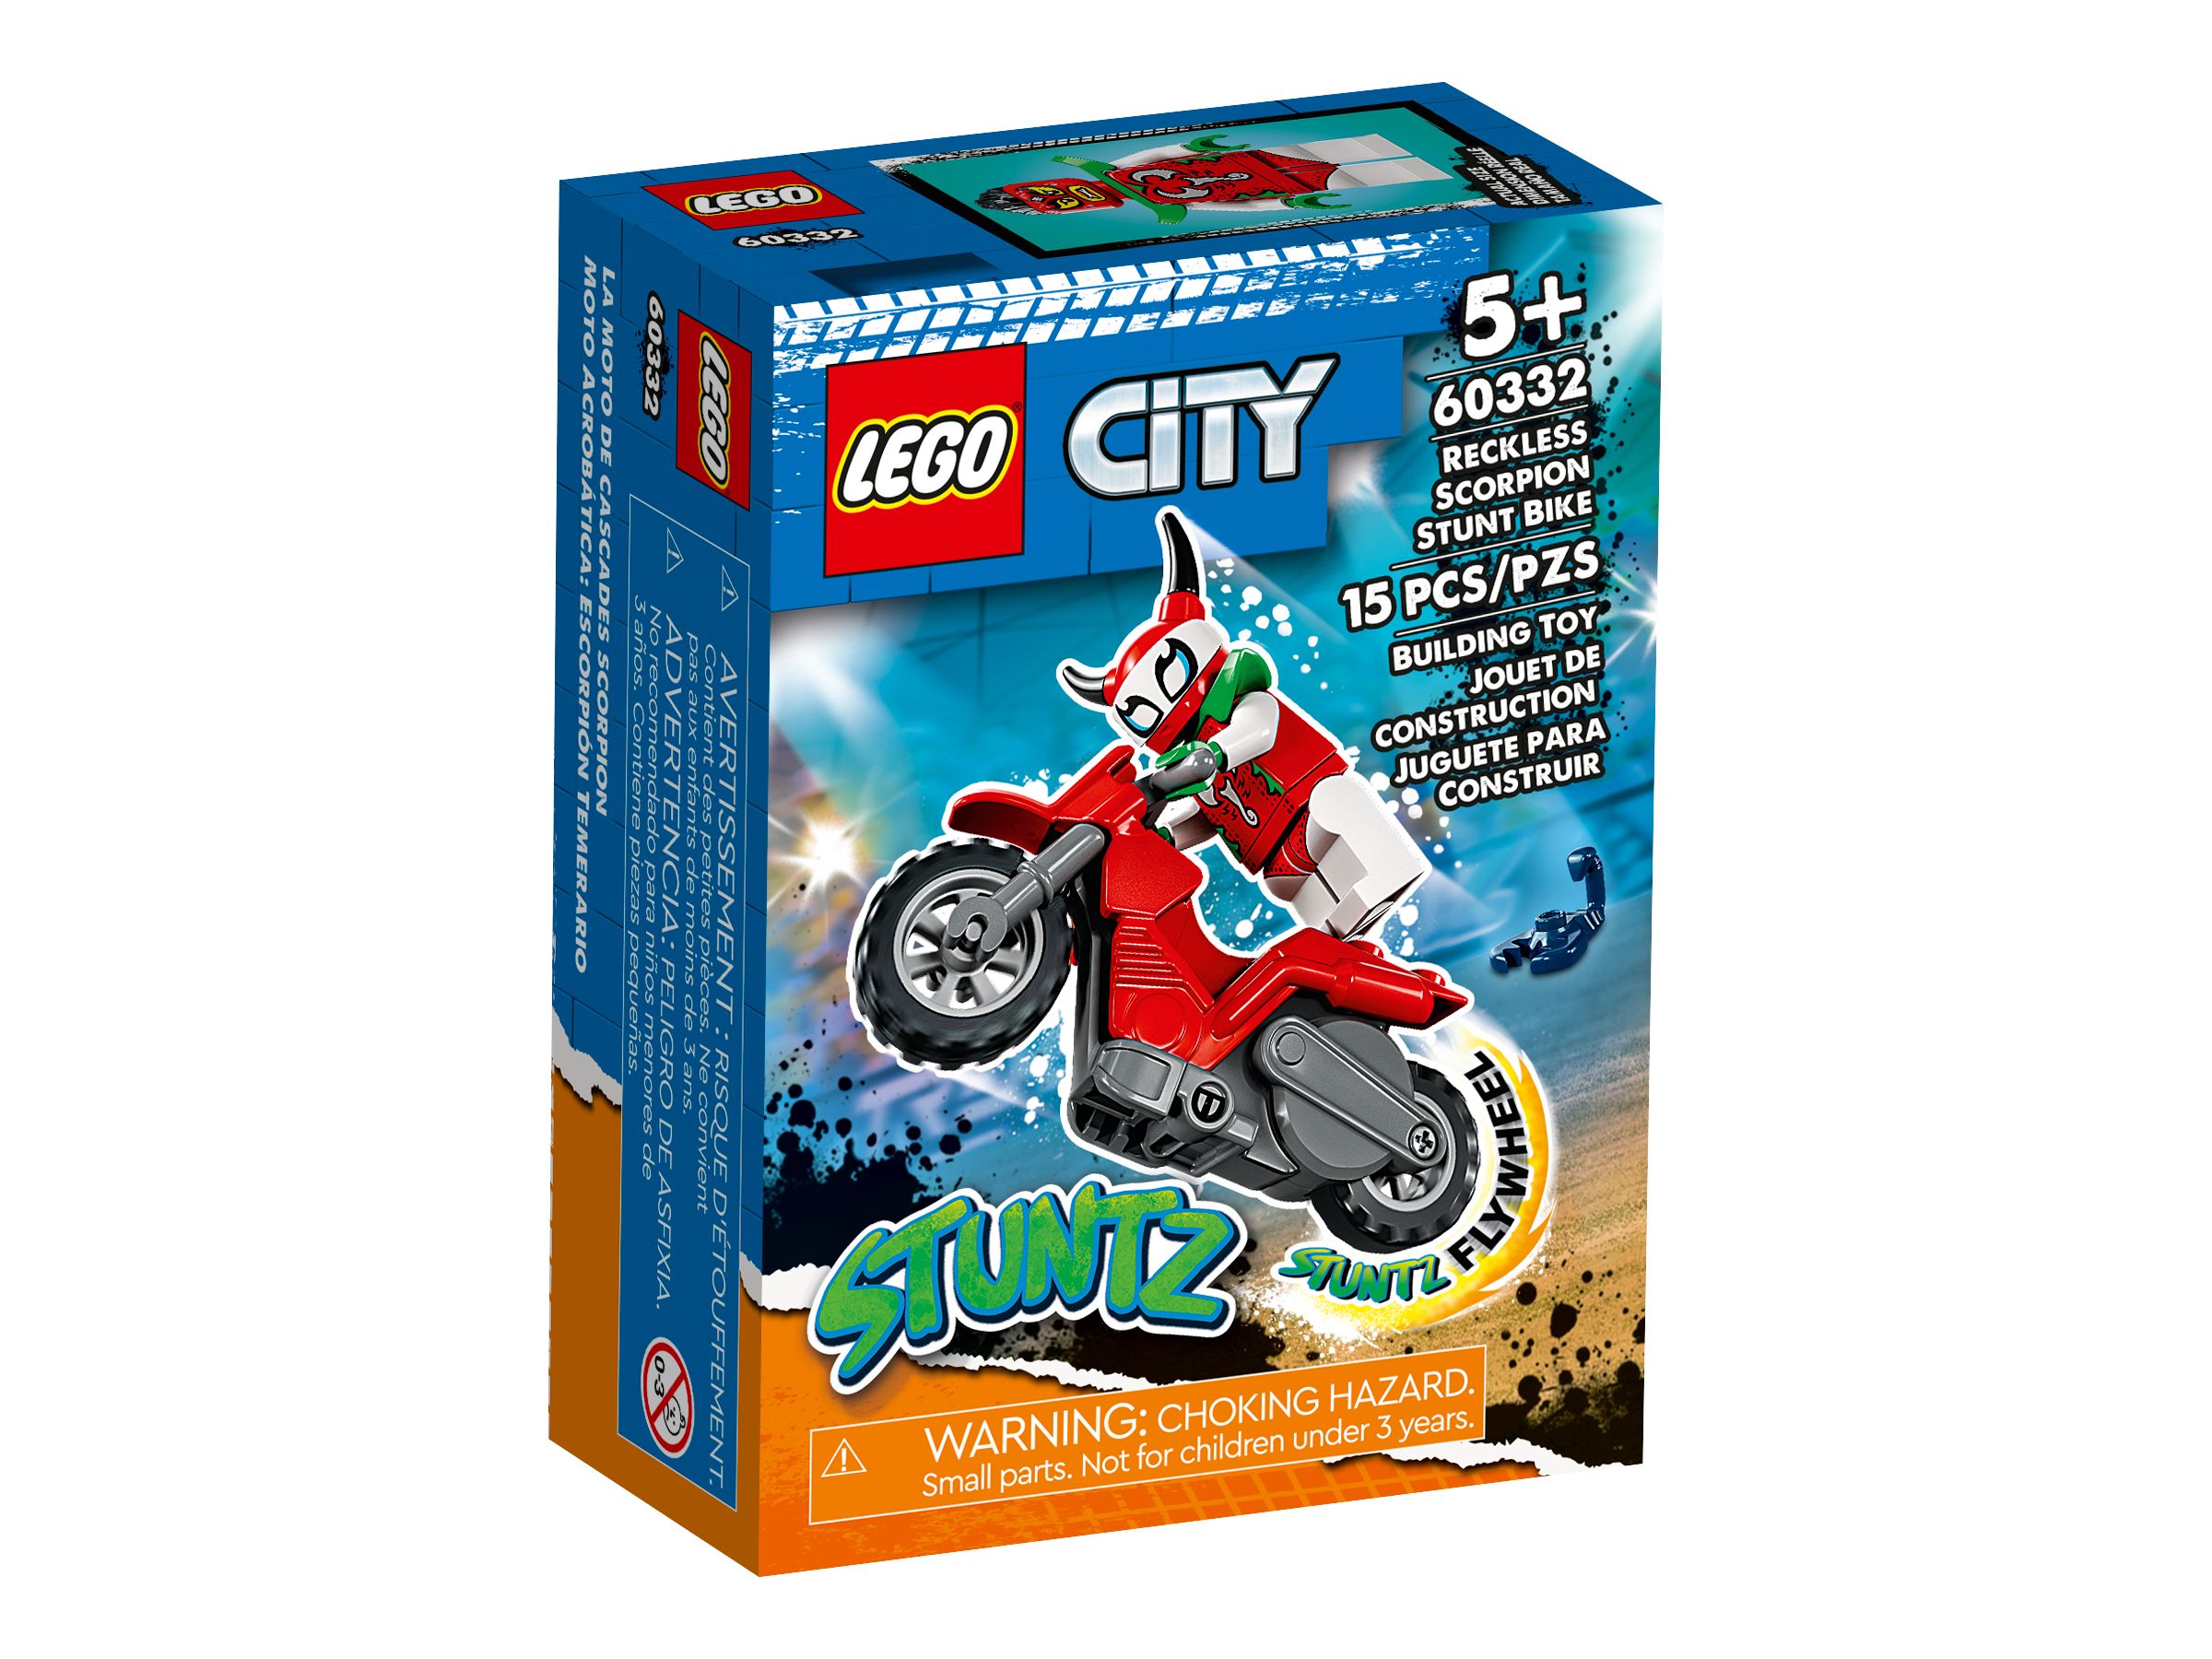 LEGO City 60332 Skorpion-Stuntbike LEGO_60332_alt1.jpg